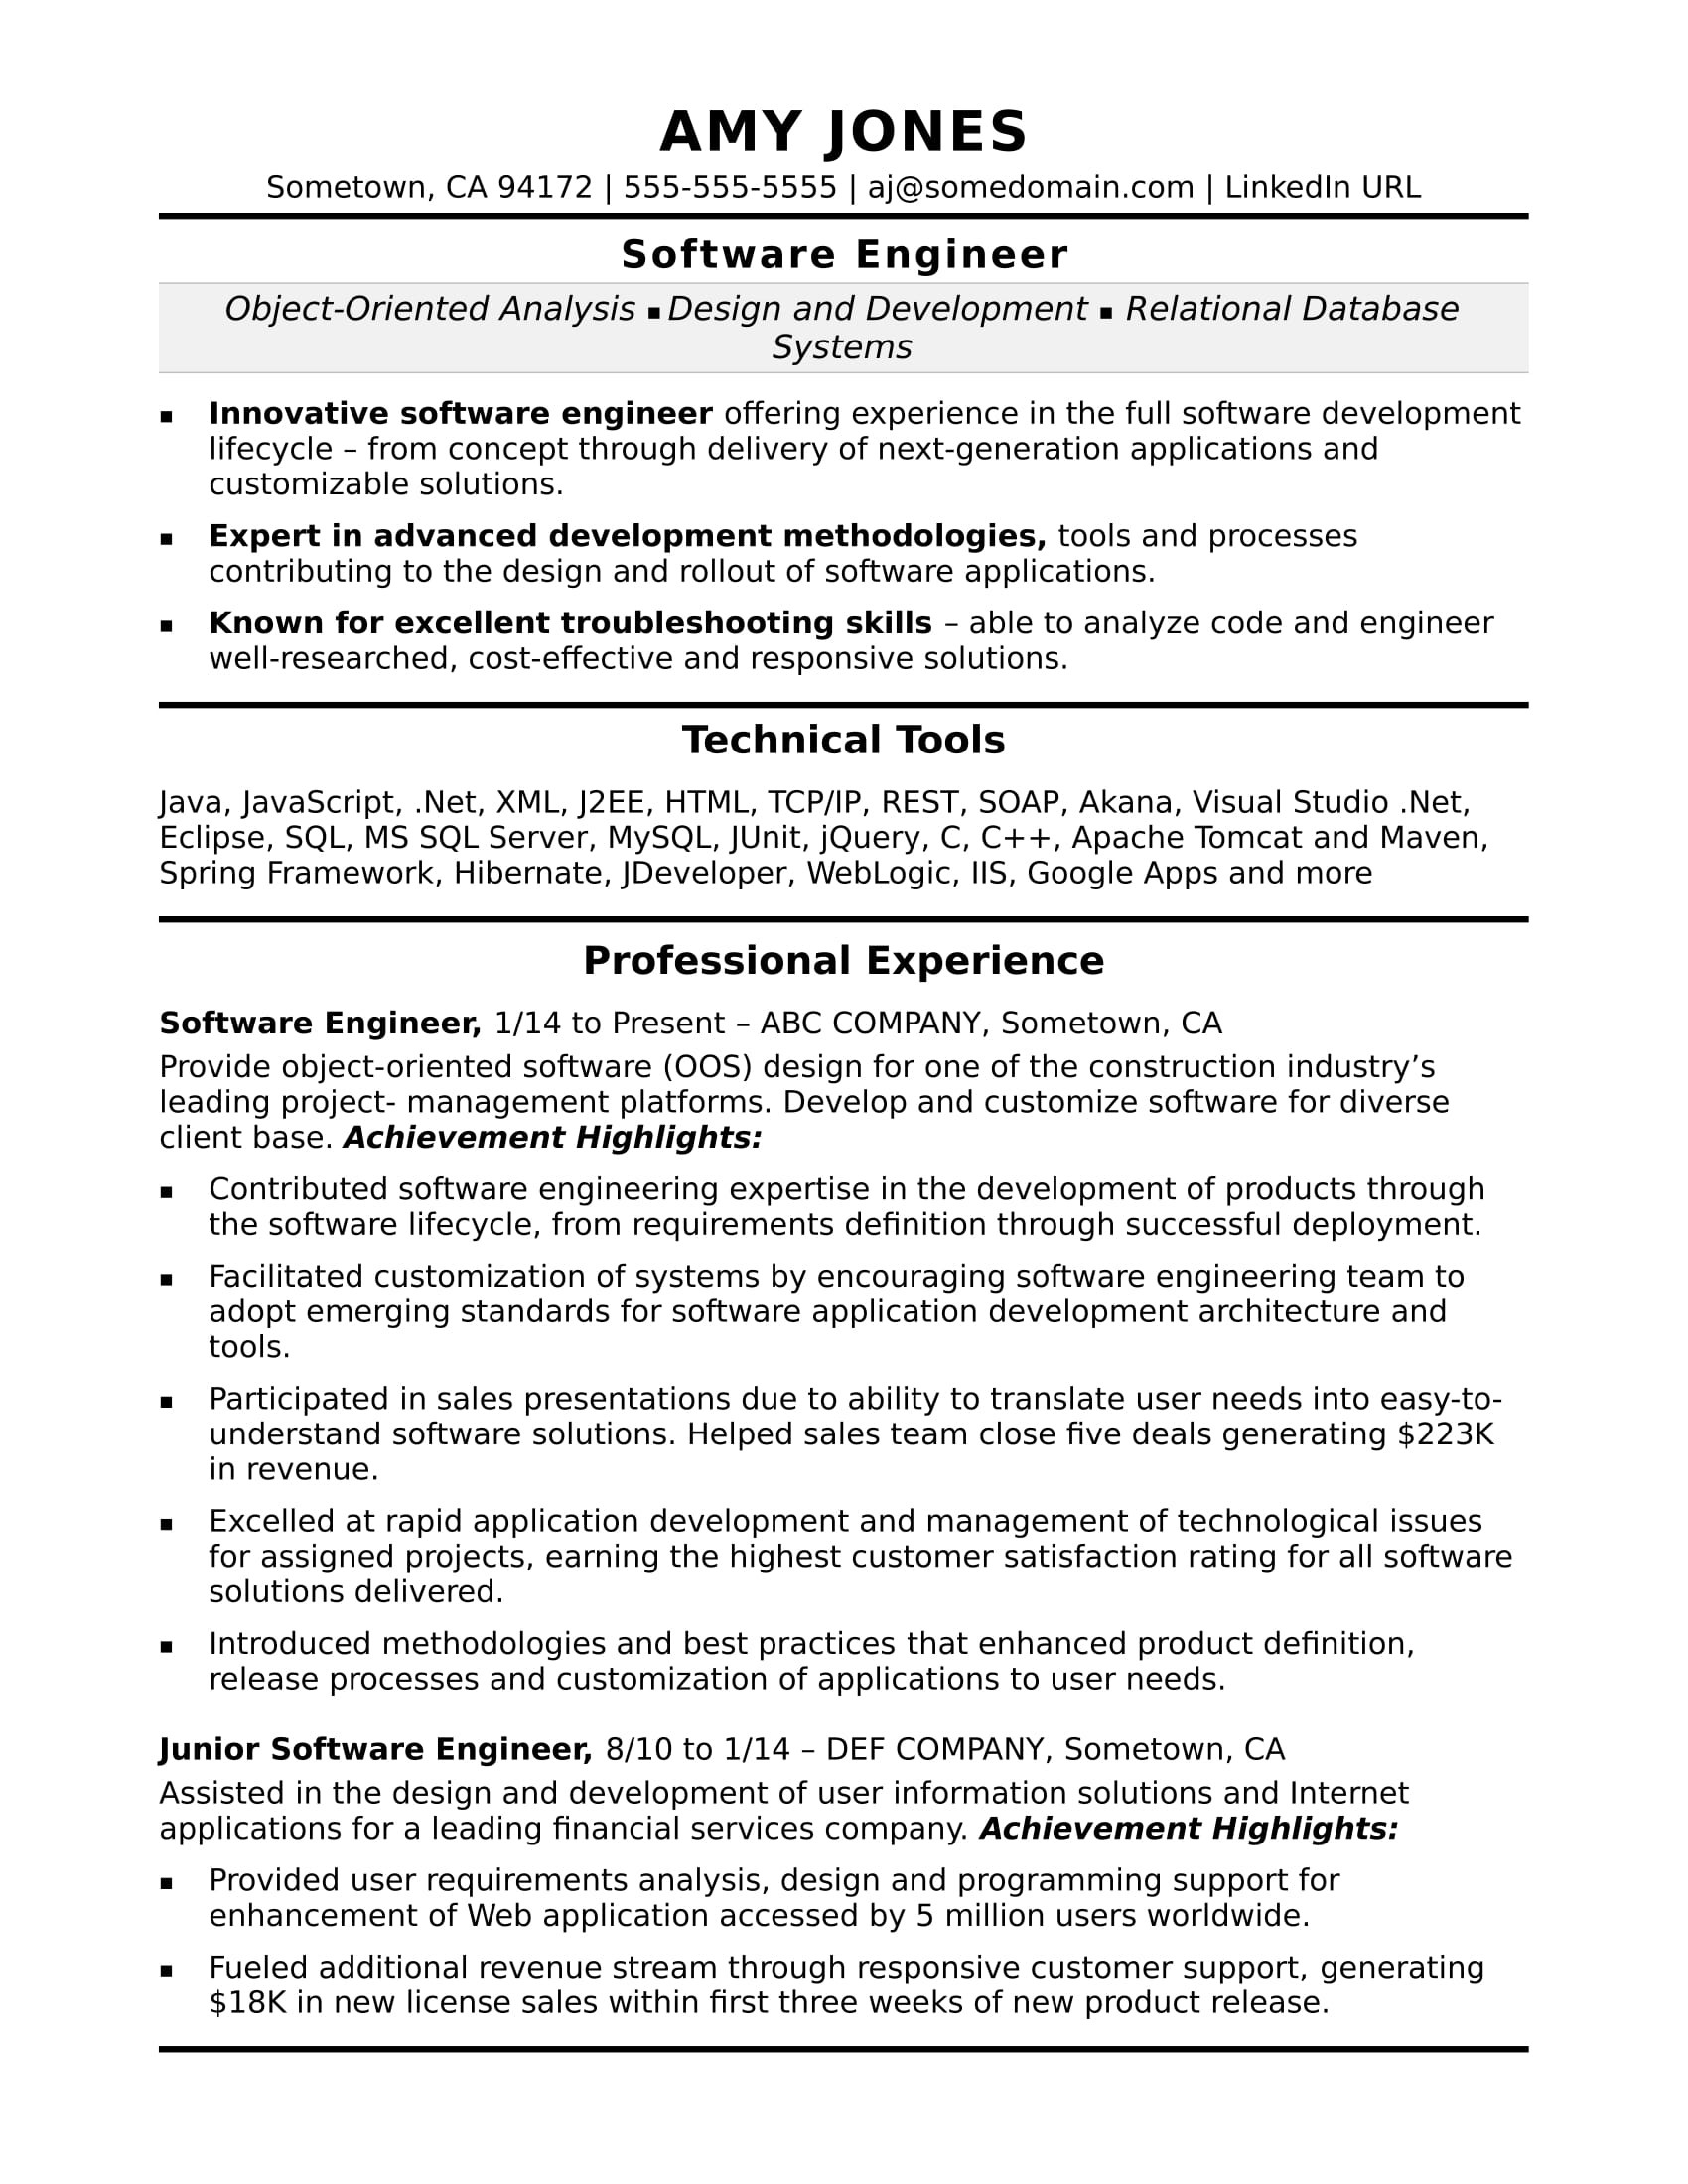 Sample Resume for Google software Engineer Midlevel software Engineer Resume Sample Monster.com